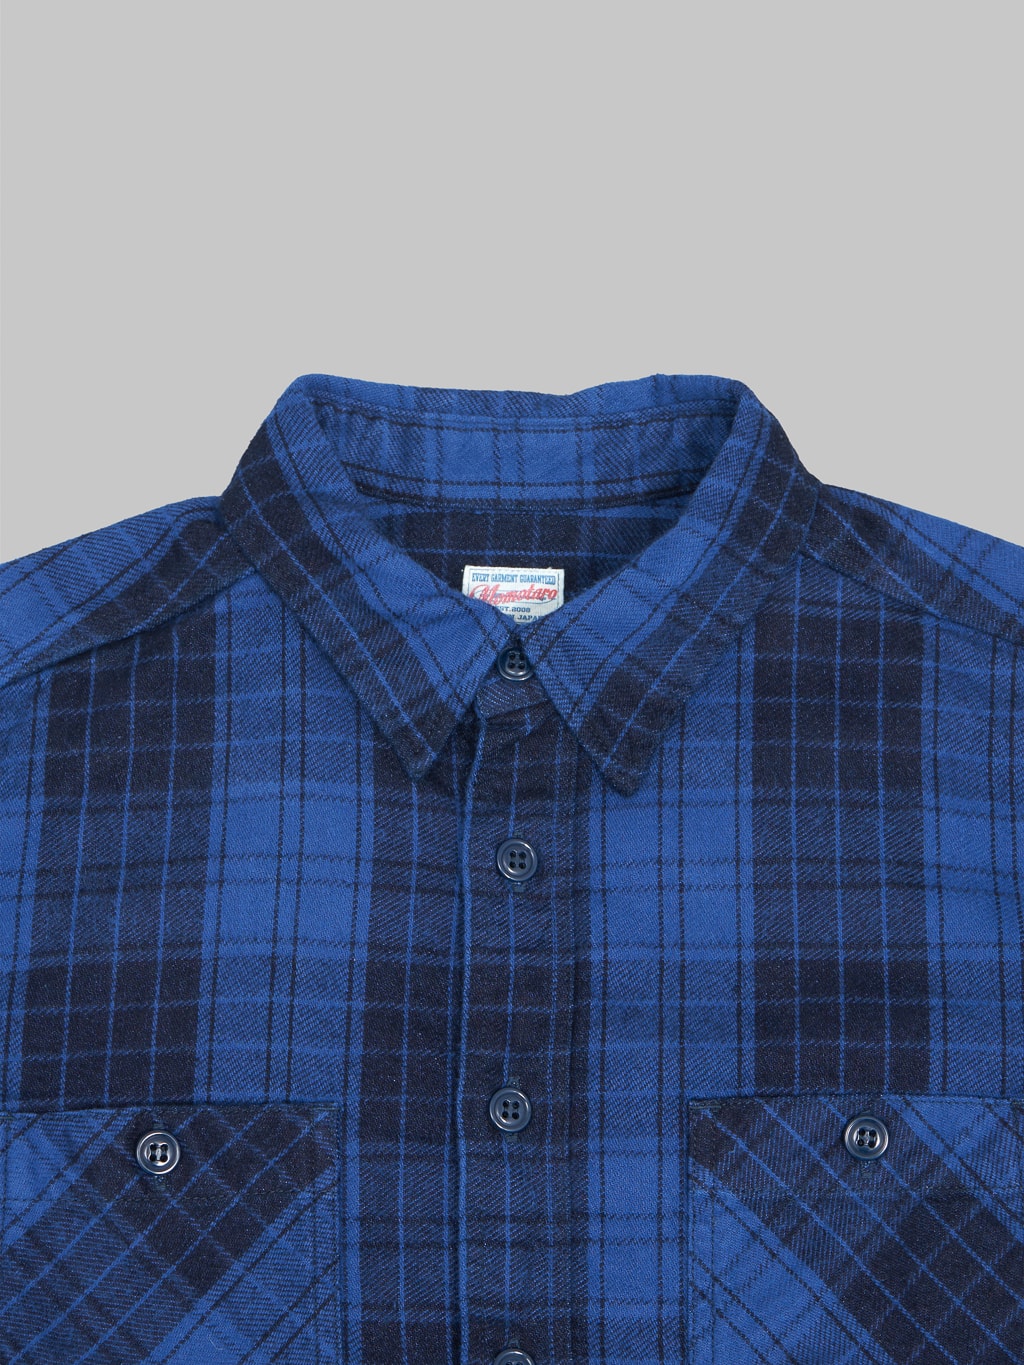 Momotaro original indigo twill check flannel shirt collar buttoned